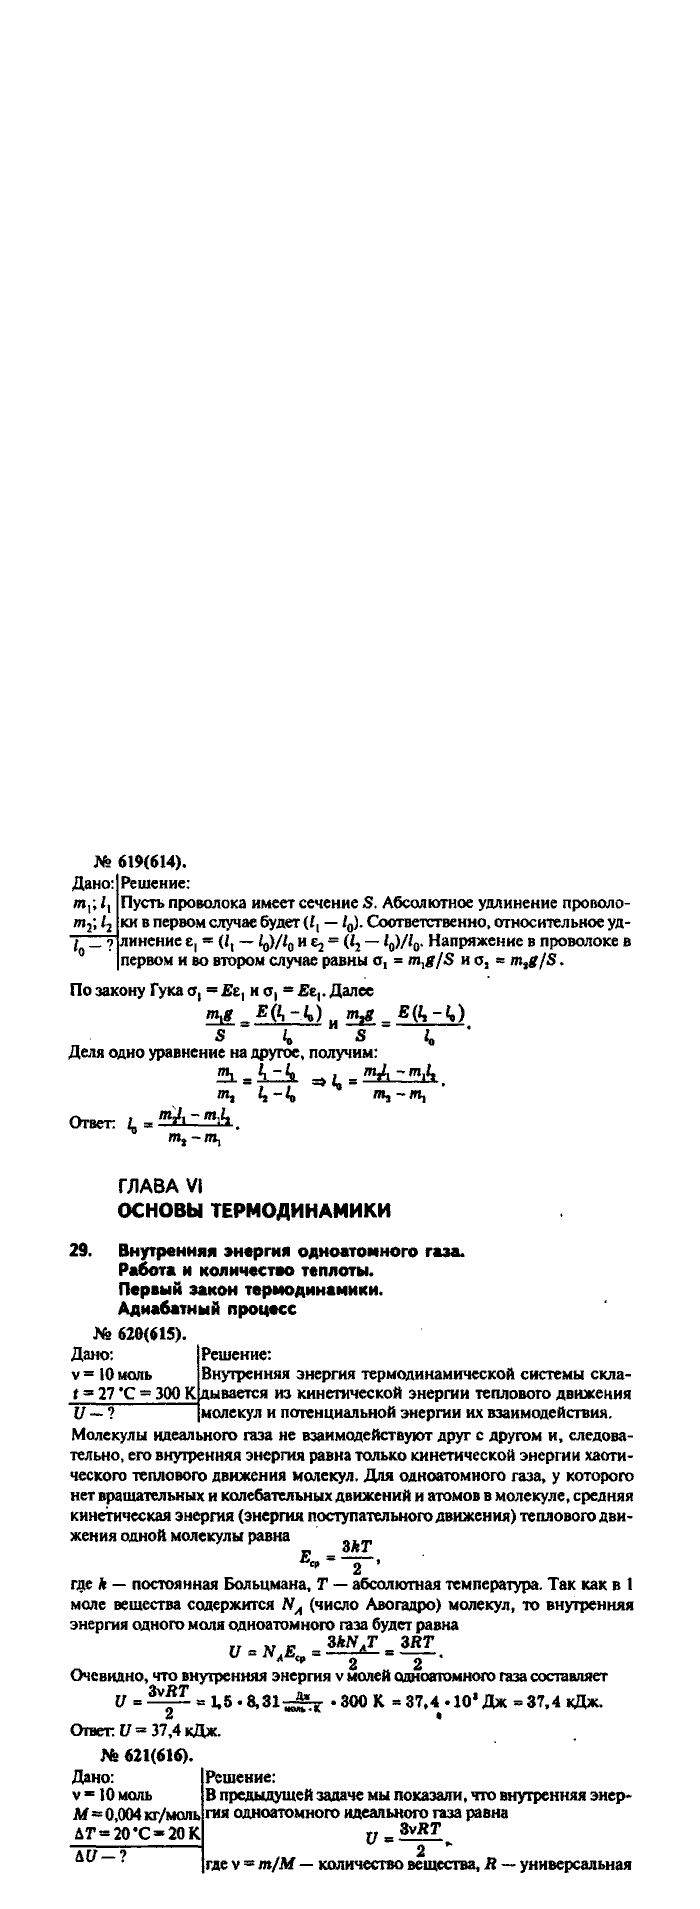 Задачник, 11 класс, Рымкевич, 2001-2013, задача: 620(615)